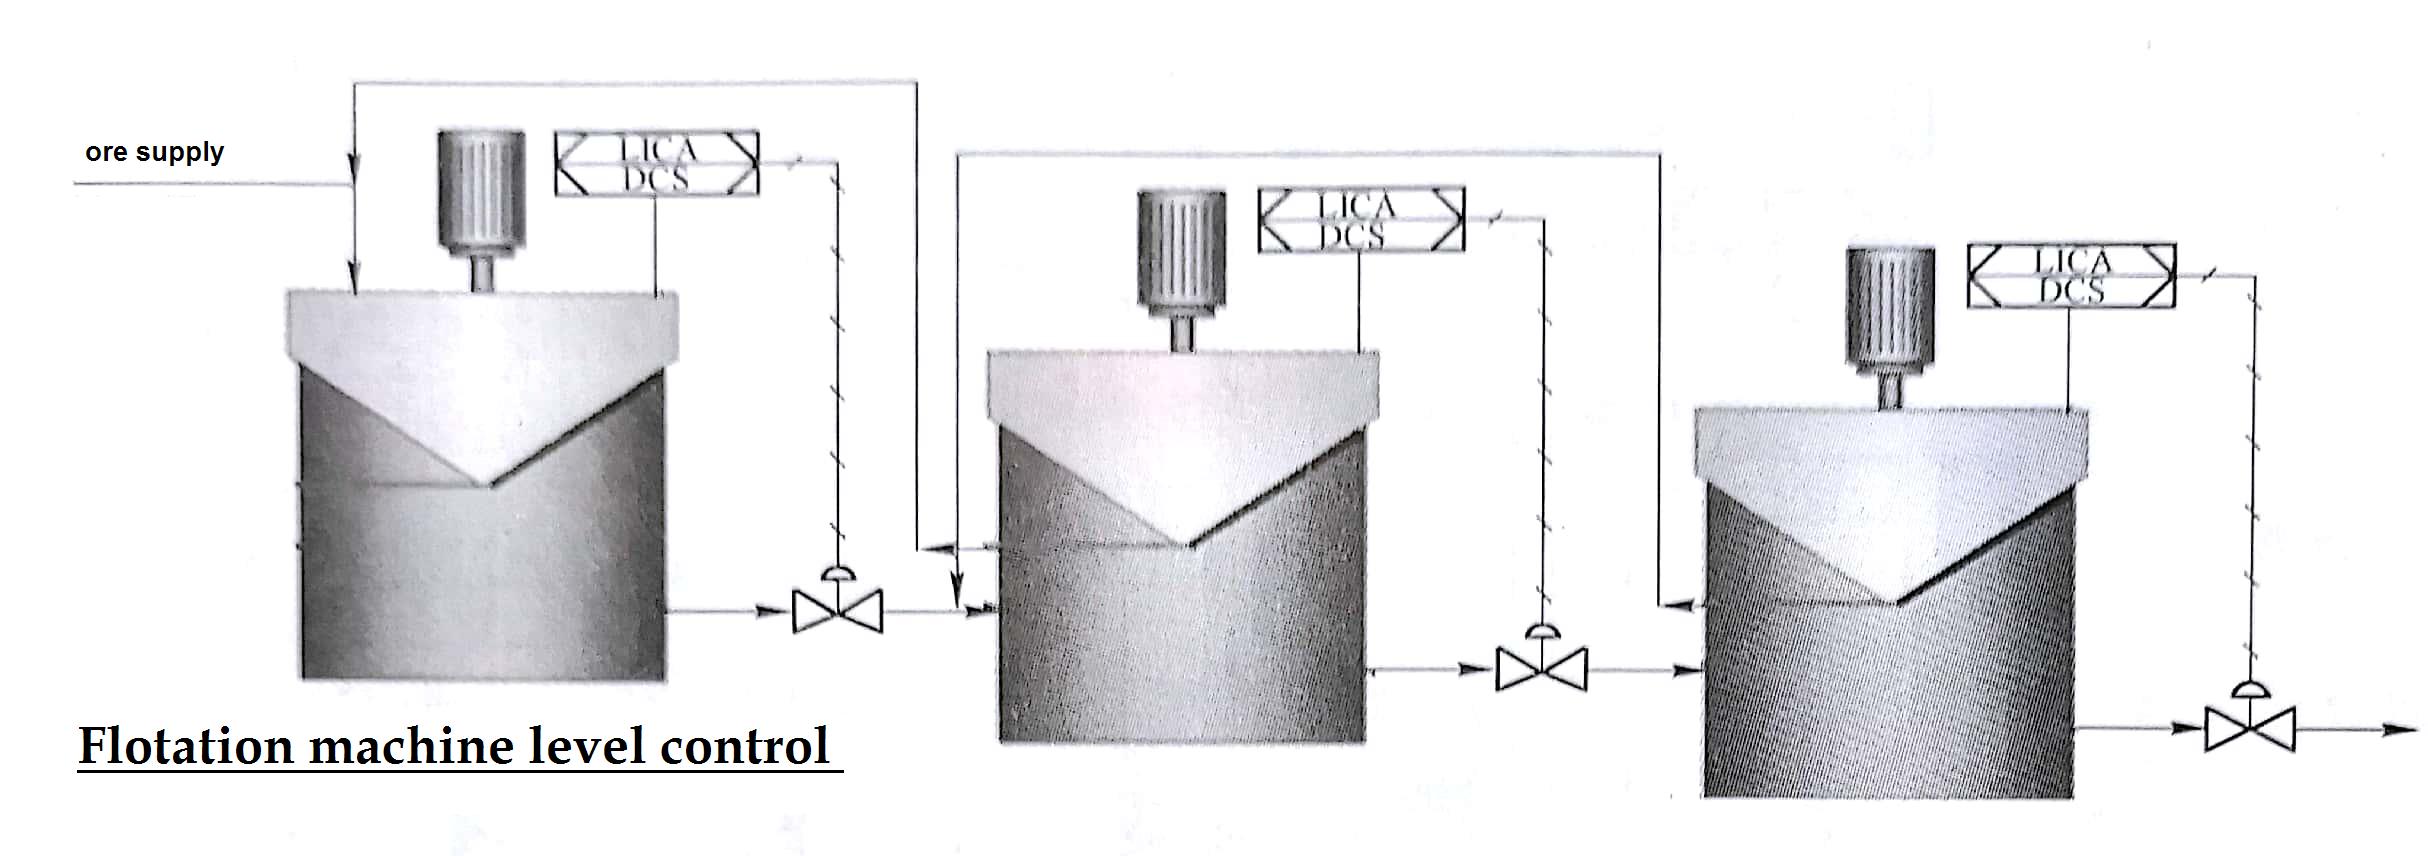 principle diagram of the floatation level control